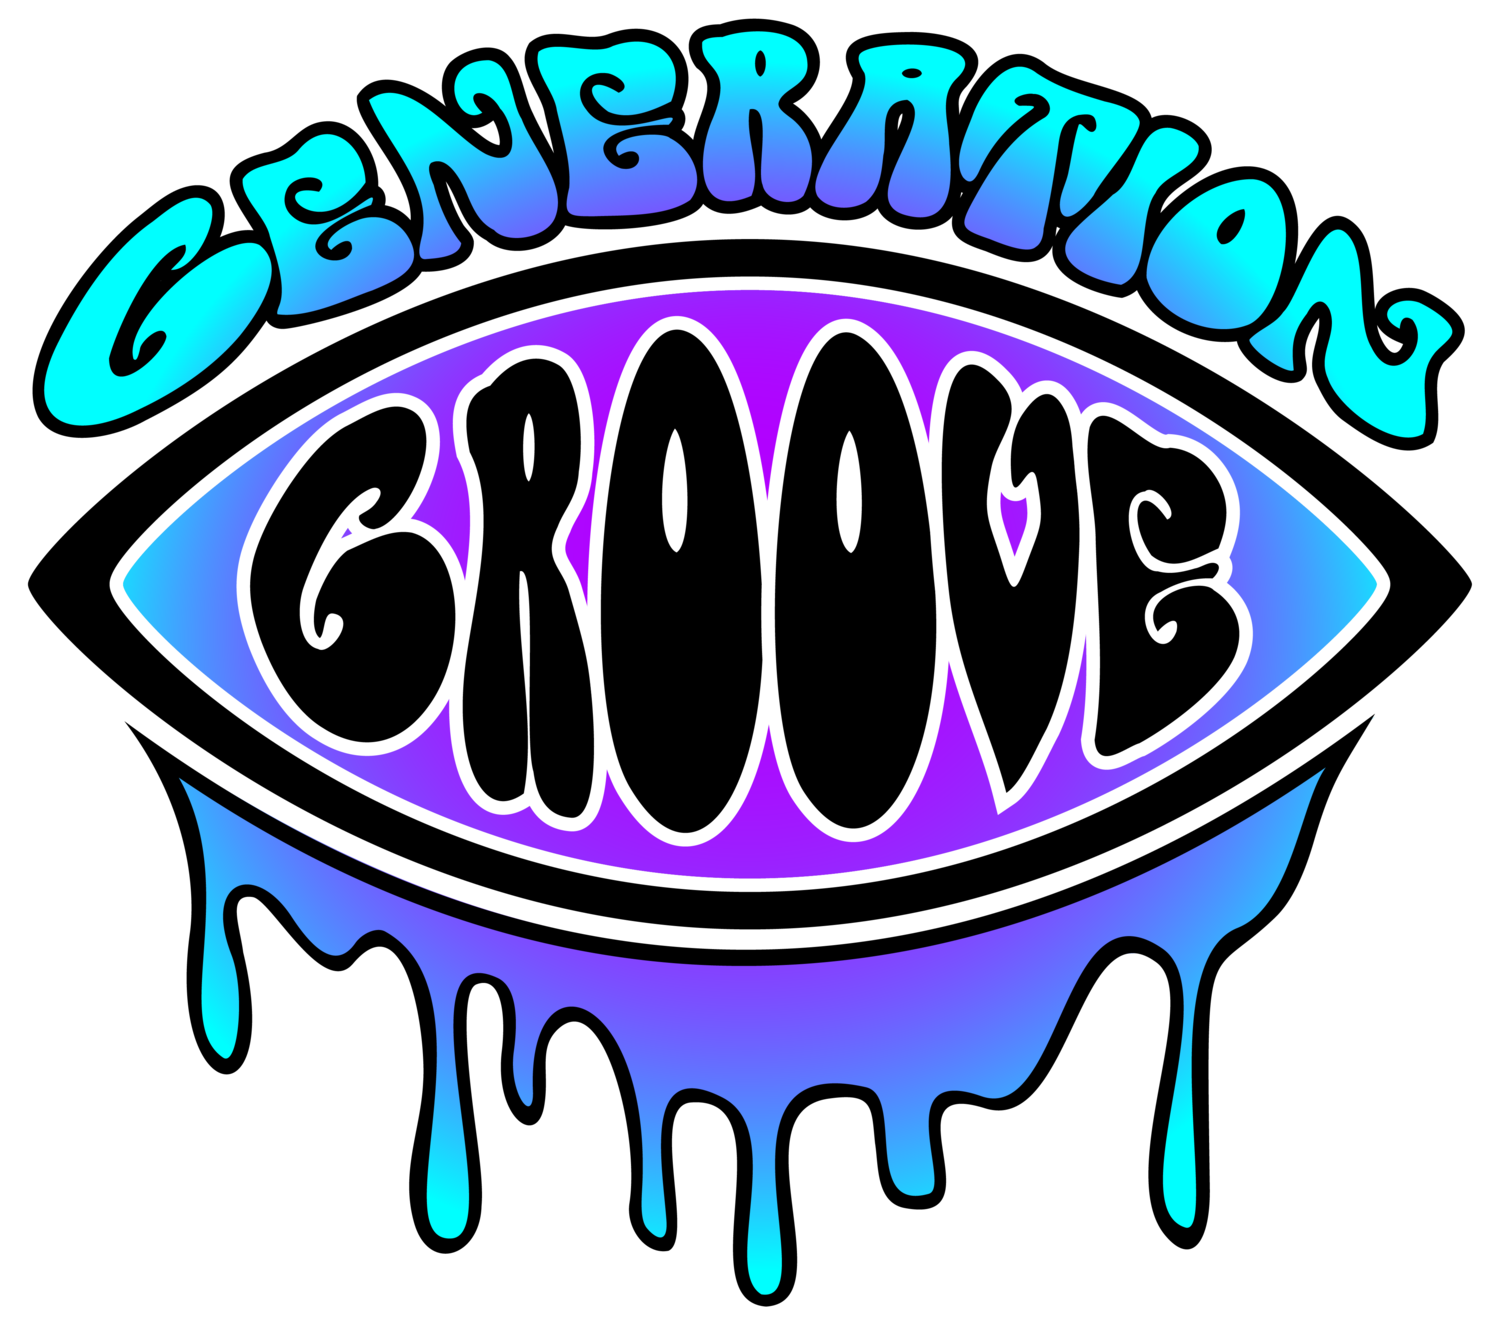 Generation Groove